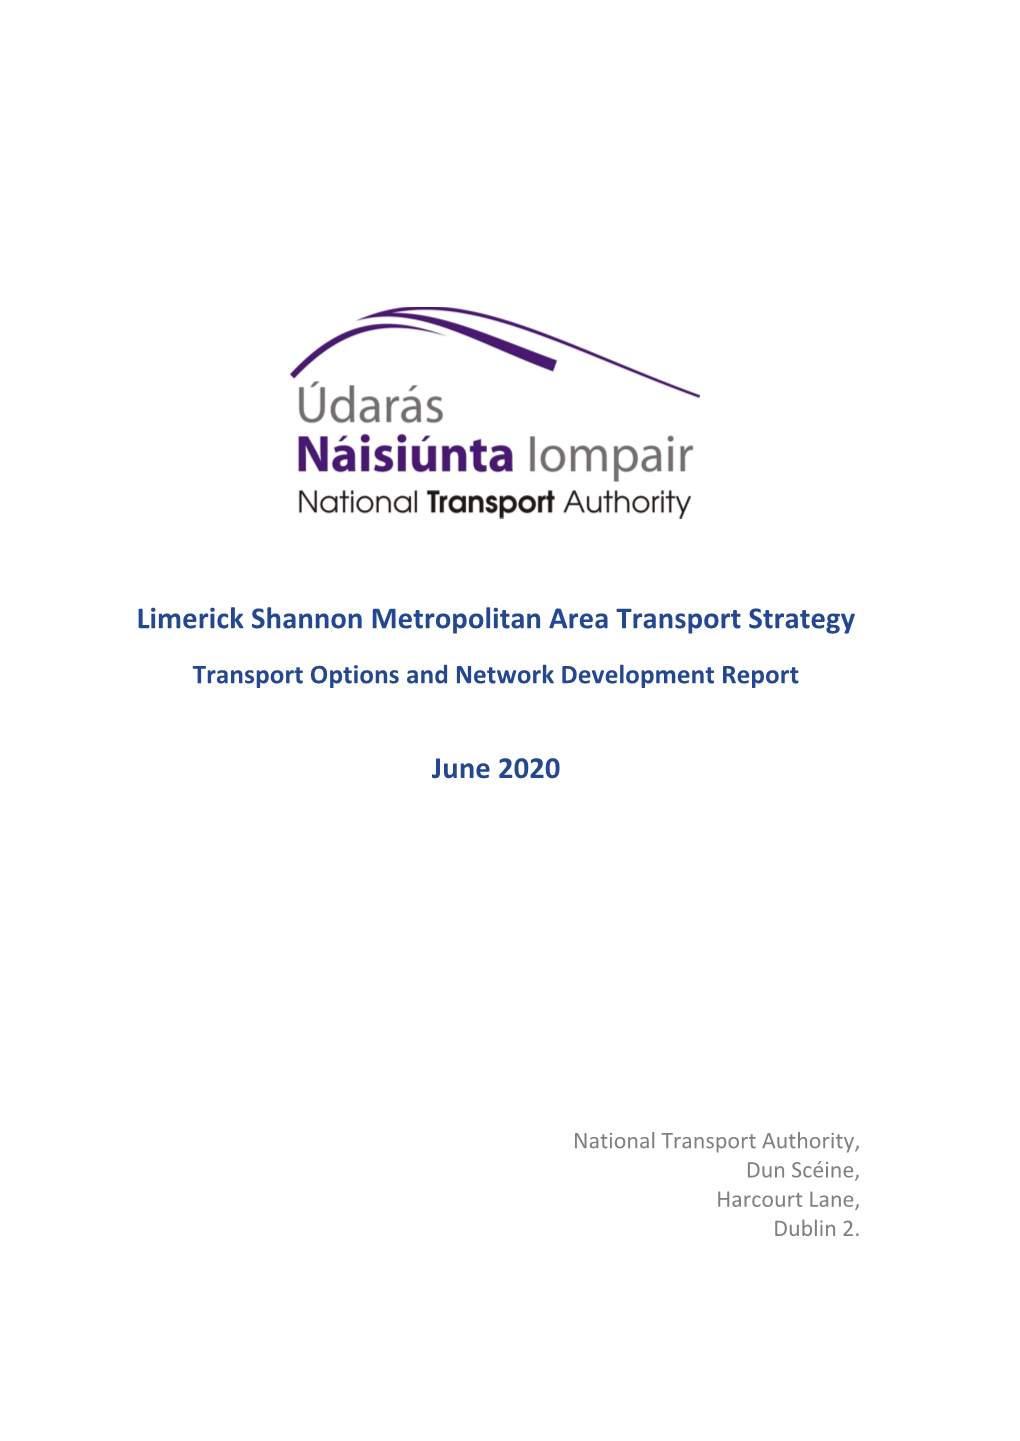 Transport Options Report